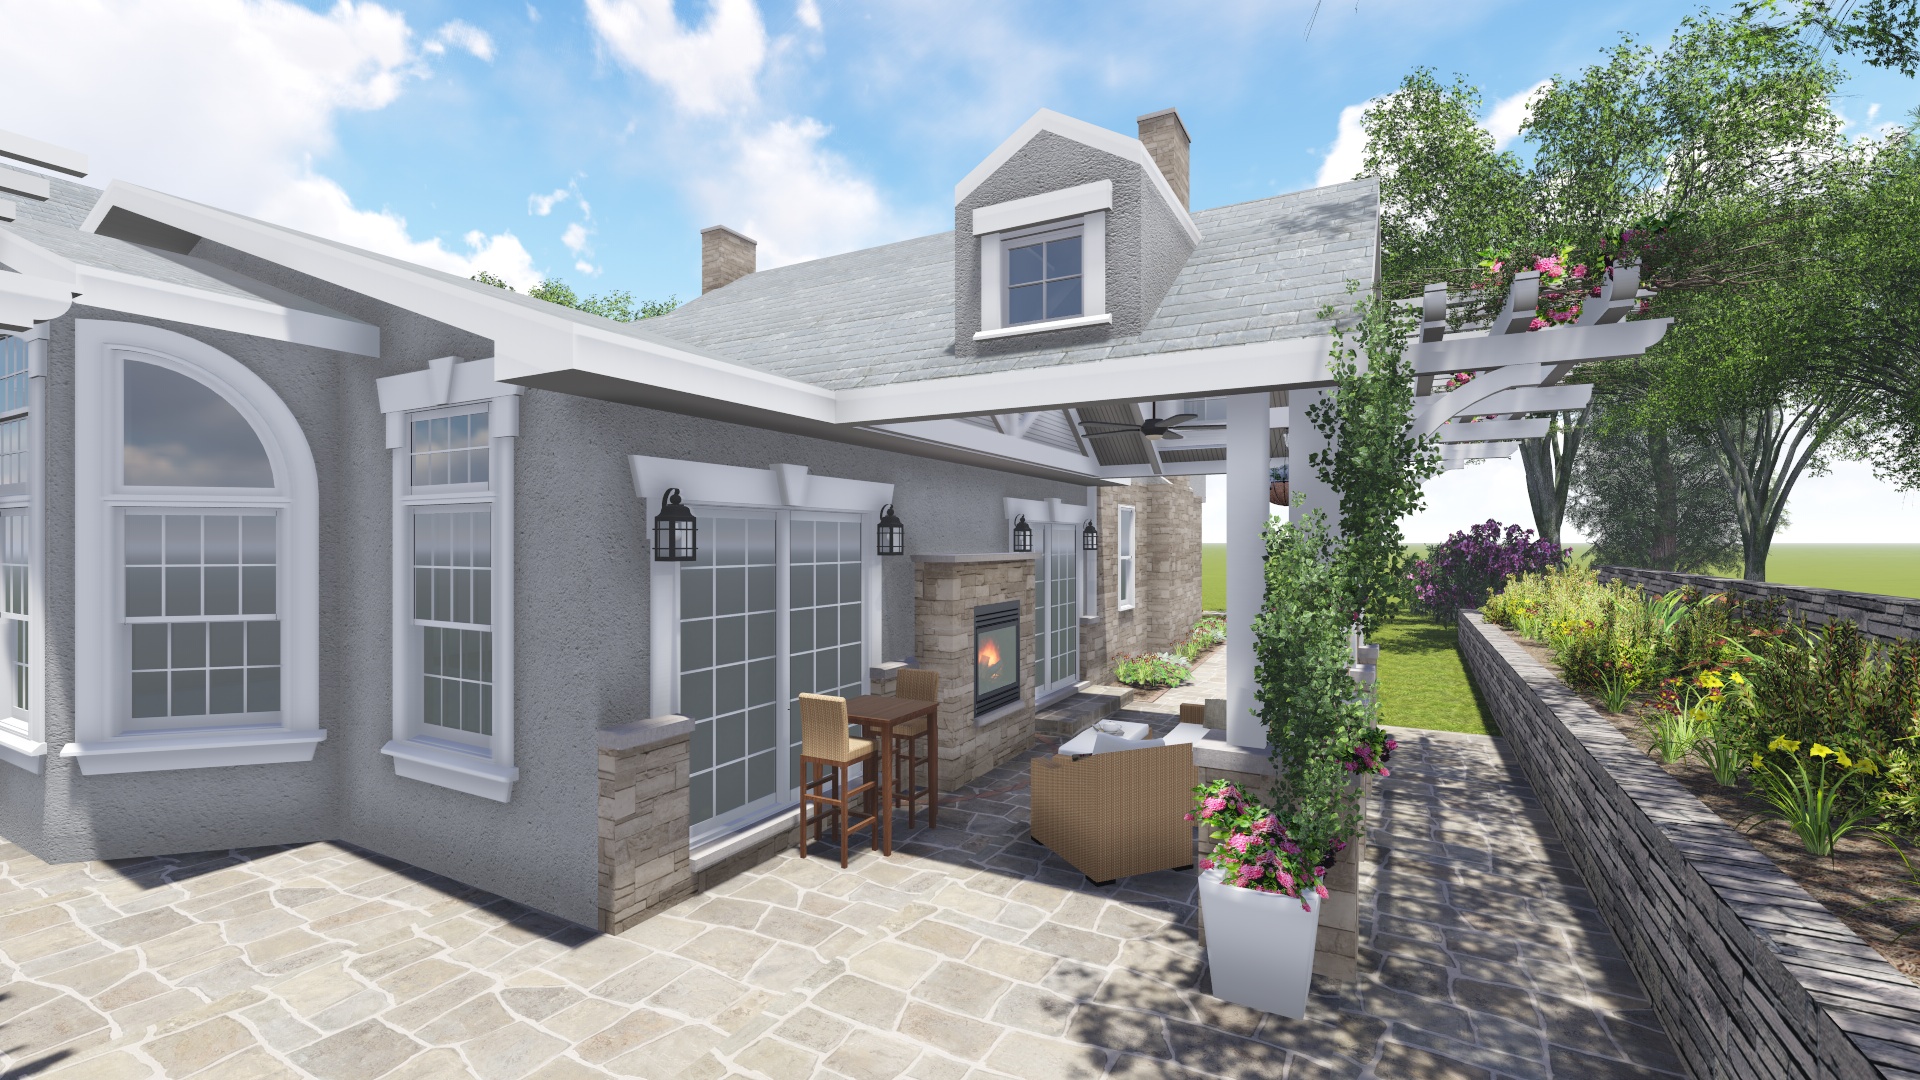 PROCESS: New side porch design option